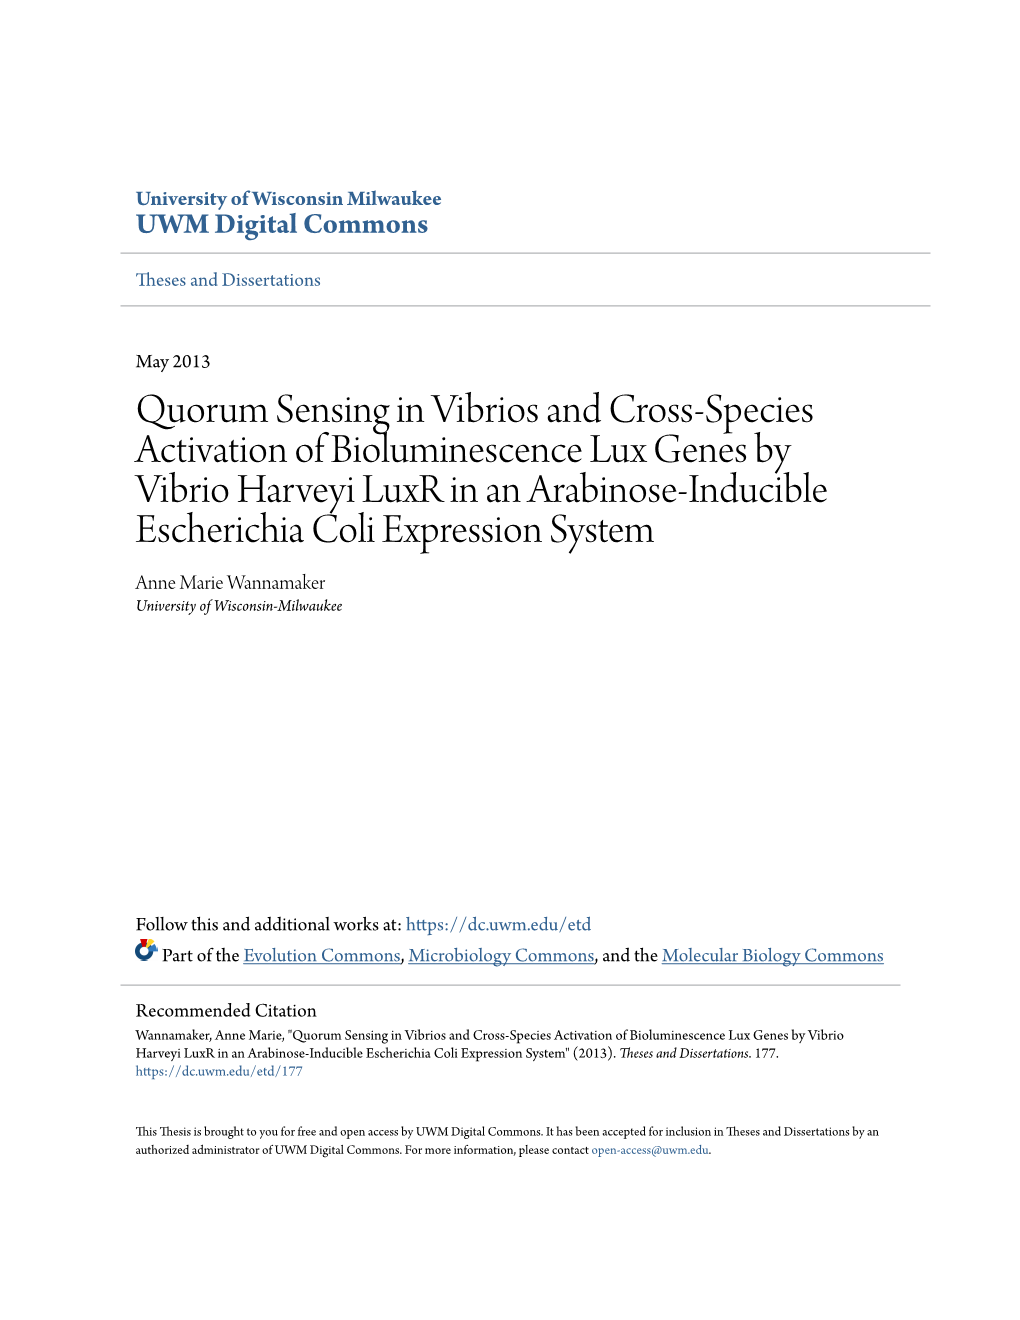 Quorum Sensing in Vibrios and Cross-Species Activation Of